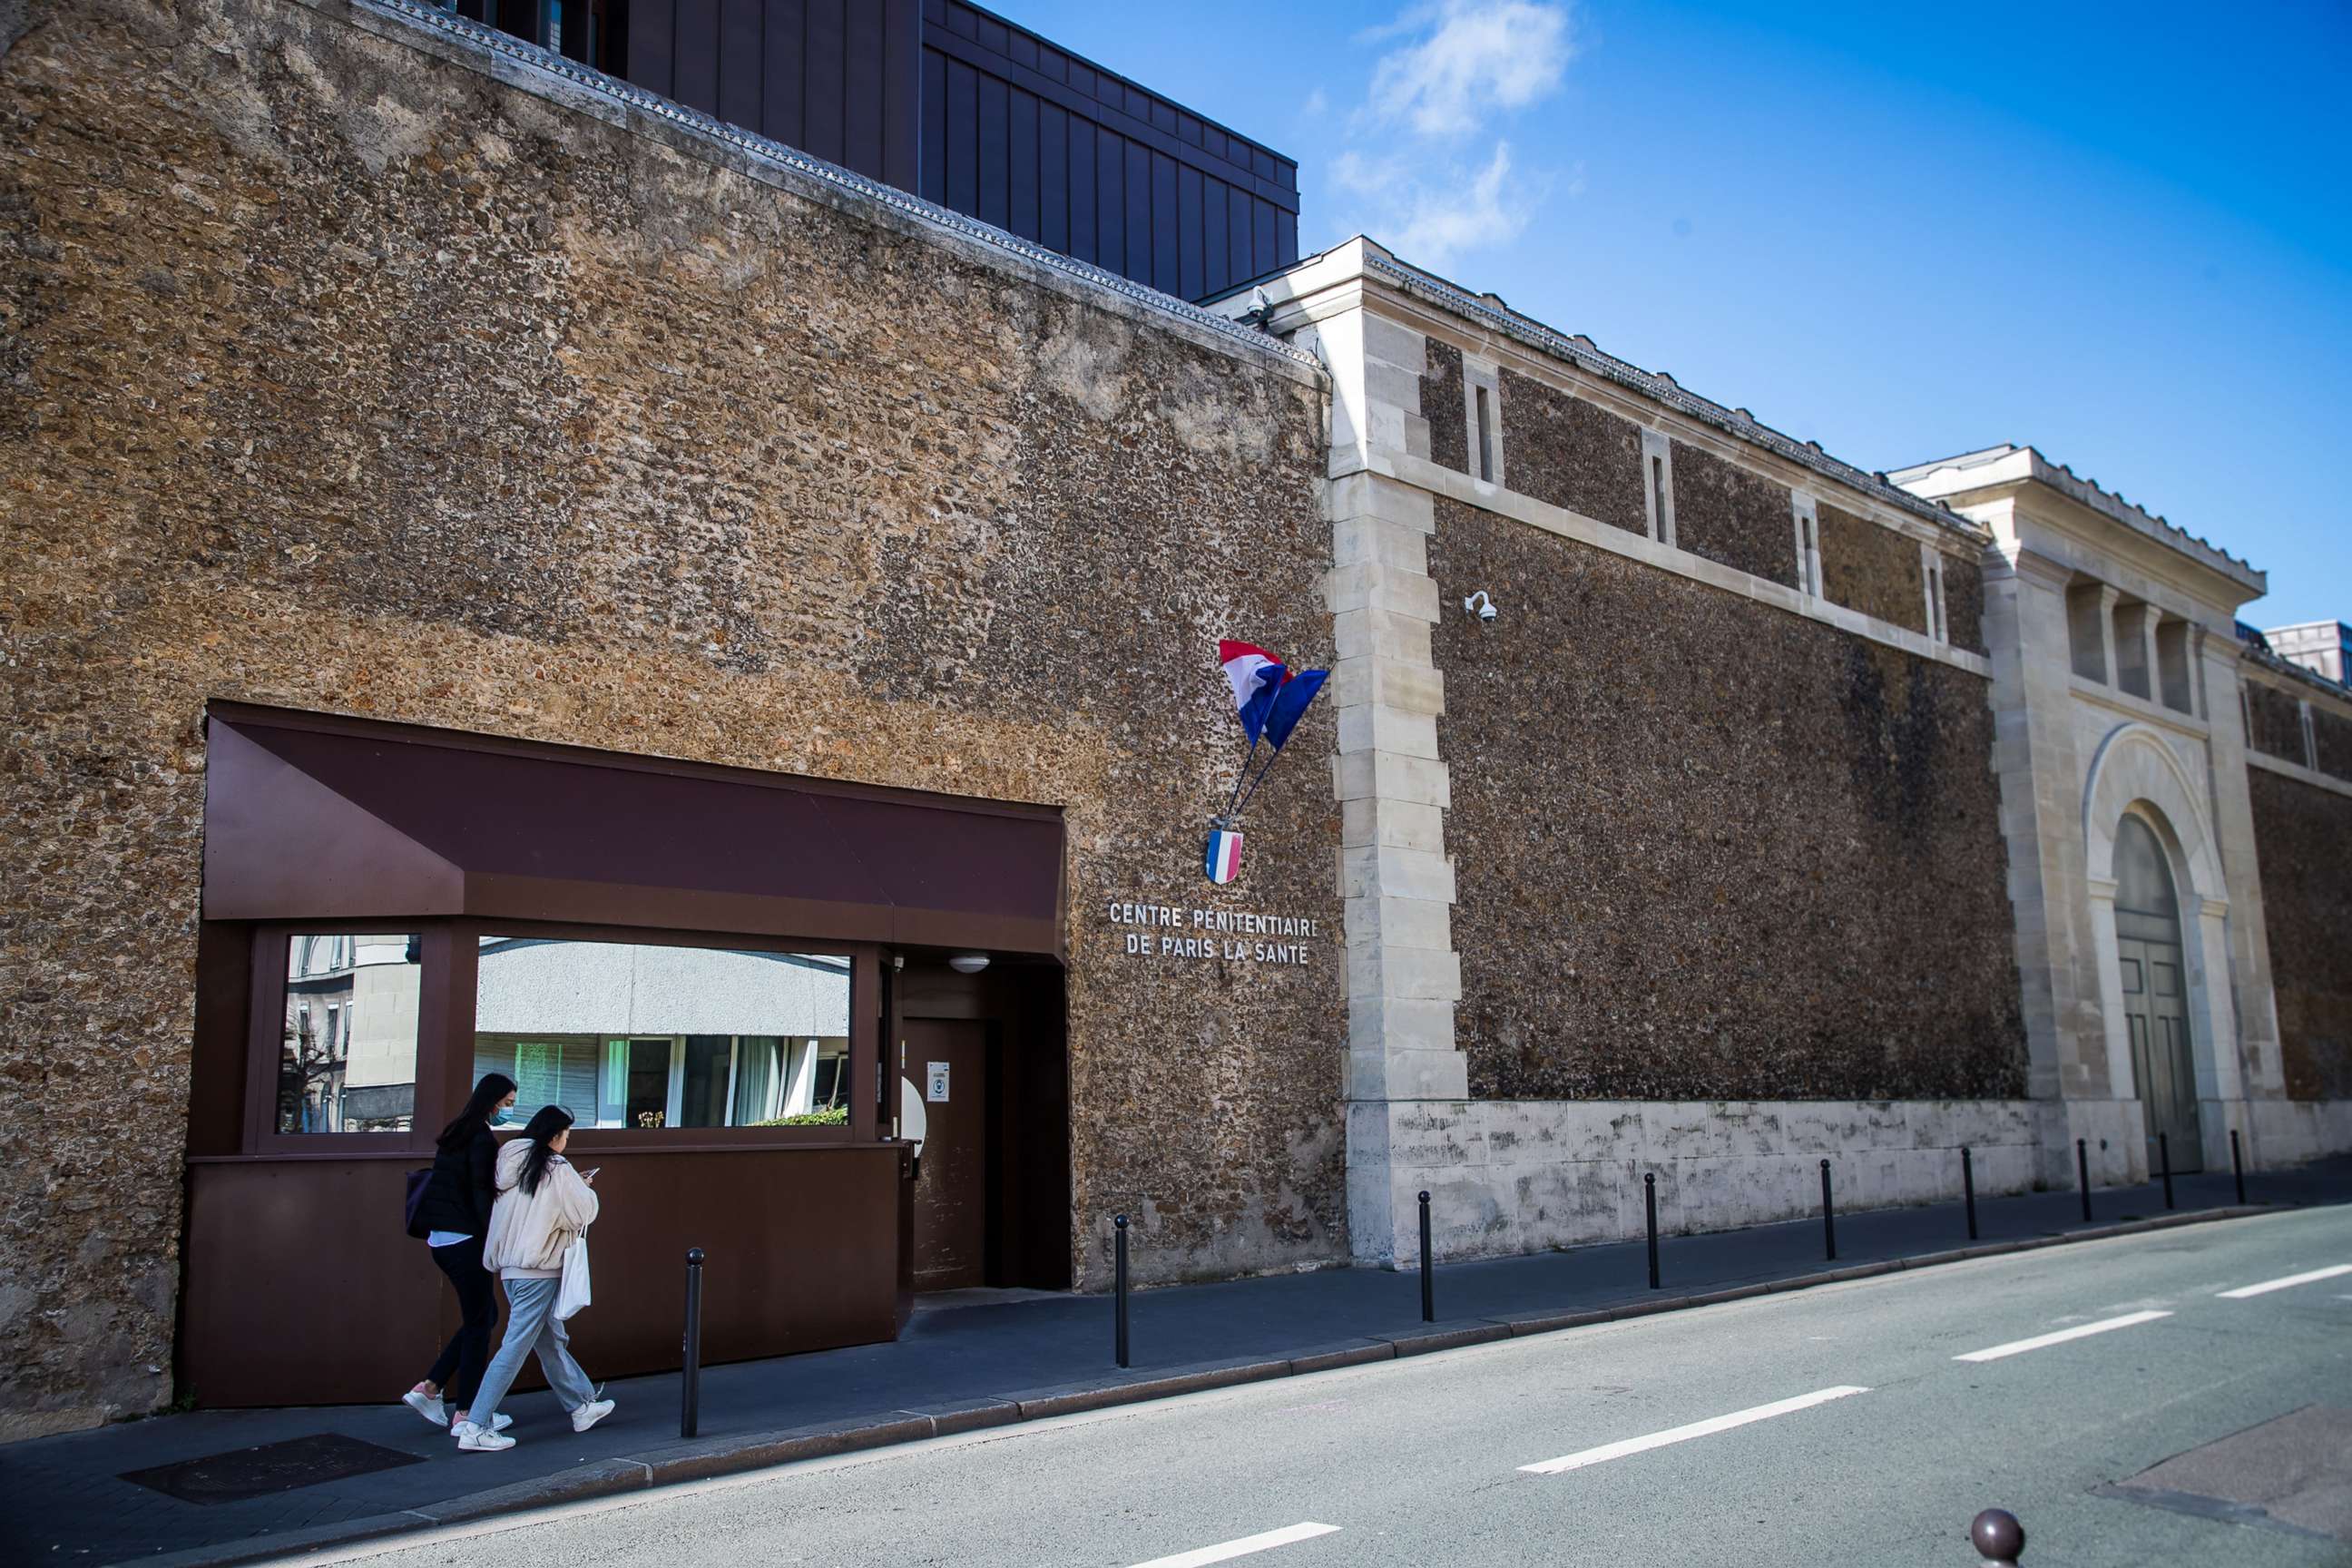 PHOTO: An exterior view of the 'Prison de la Sante', a penitentiary center where Jean-Luc Brunel was found dead in his cell, in Paris, Feb. 19, 2022.